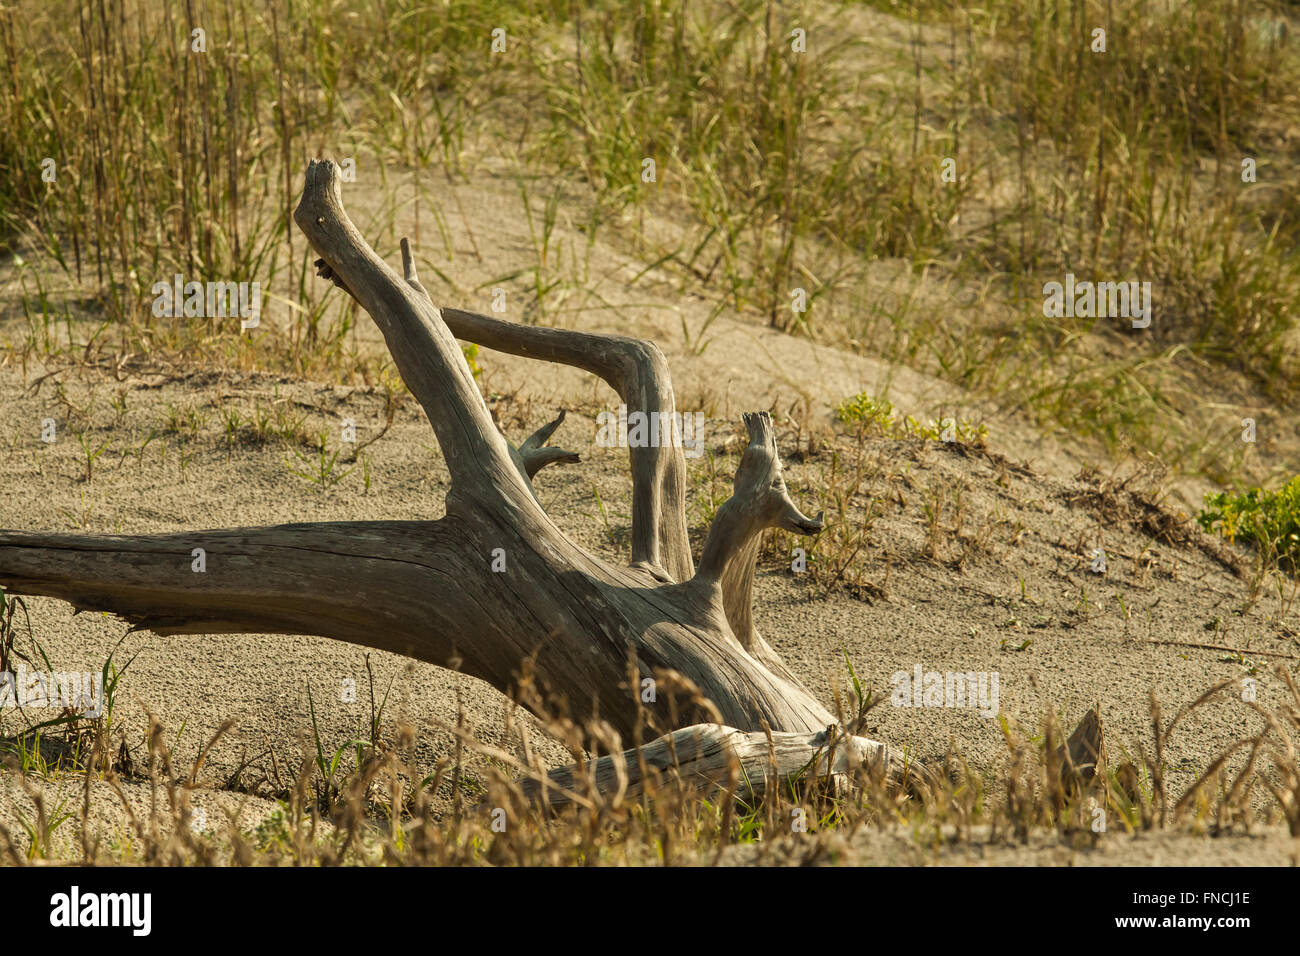 Beach driftwood on Grassy dune di sabbia Foto Stock